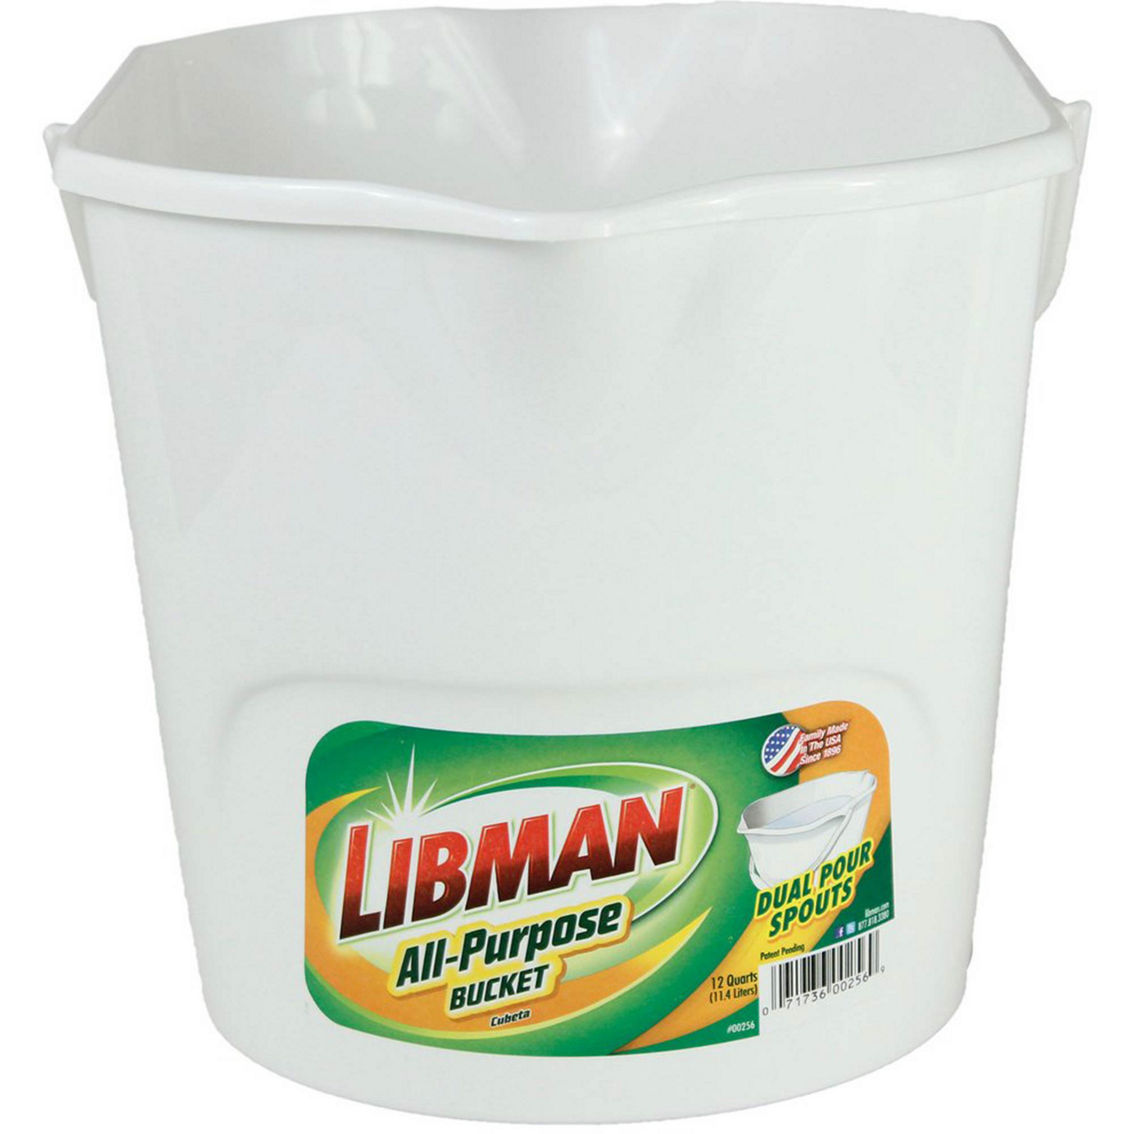 Libman All Purpose Bucket - Image 2 of 3